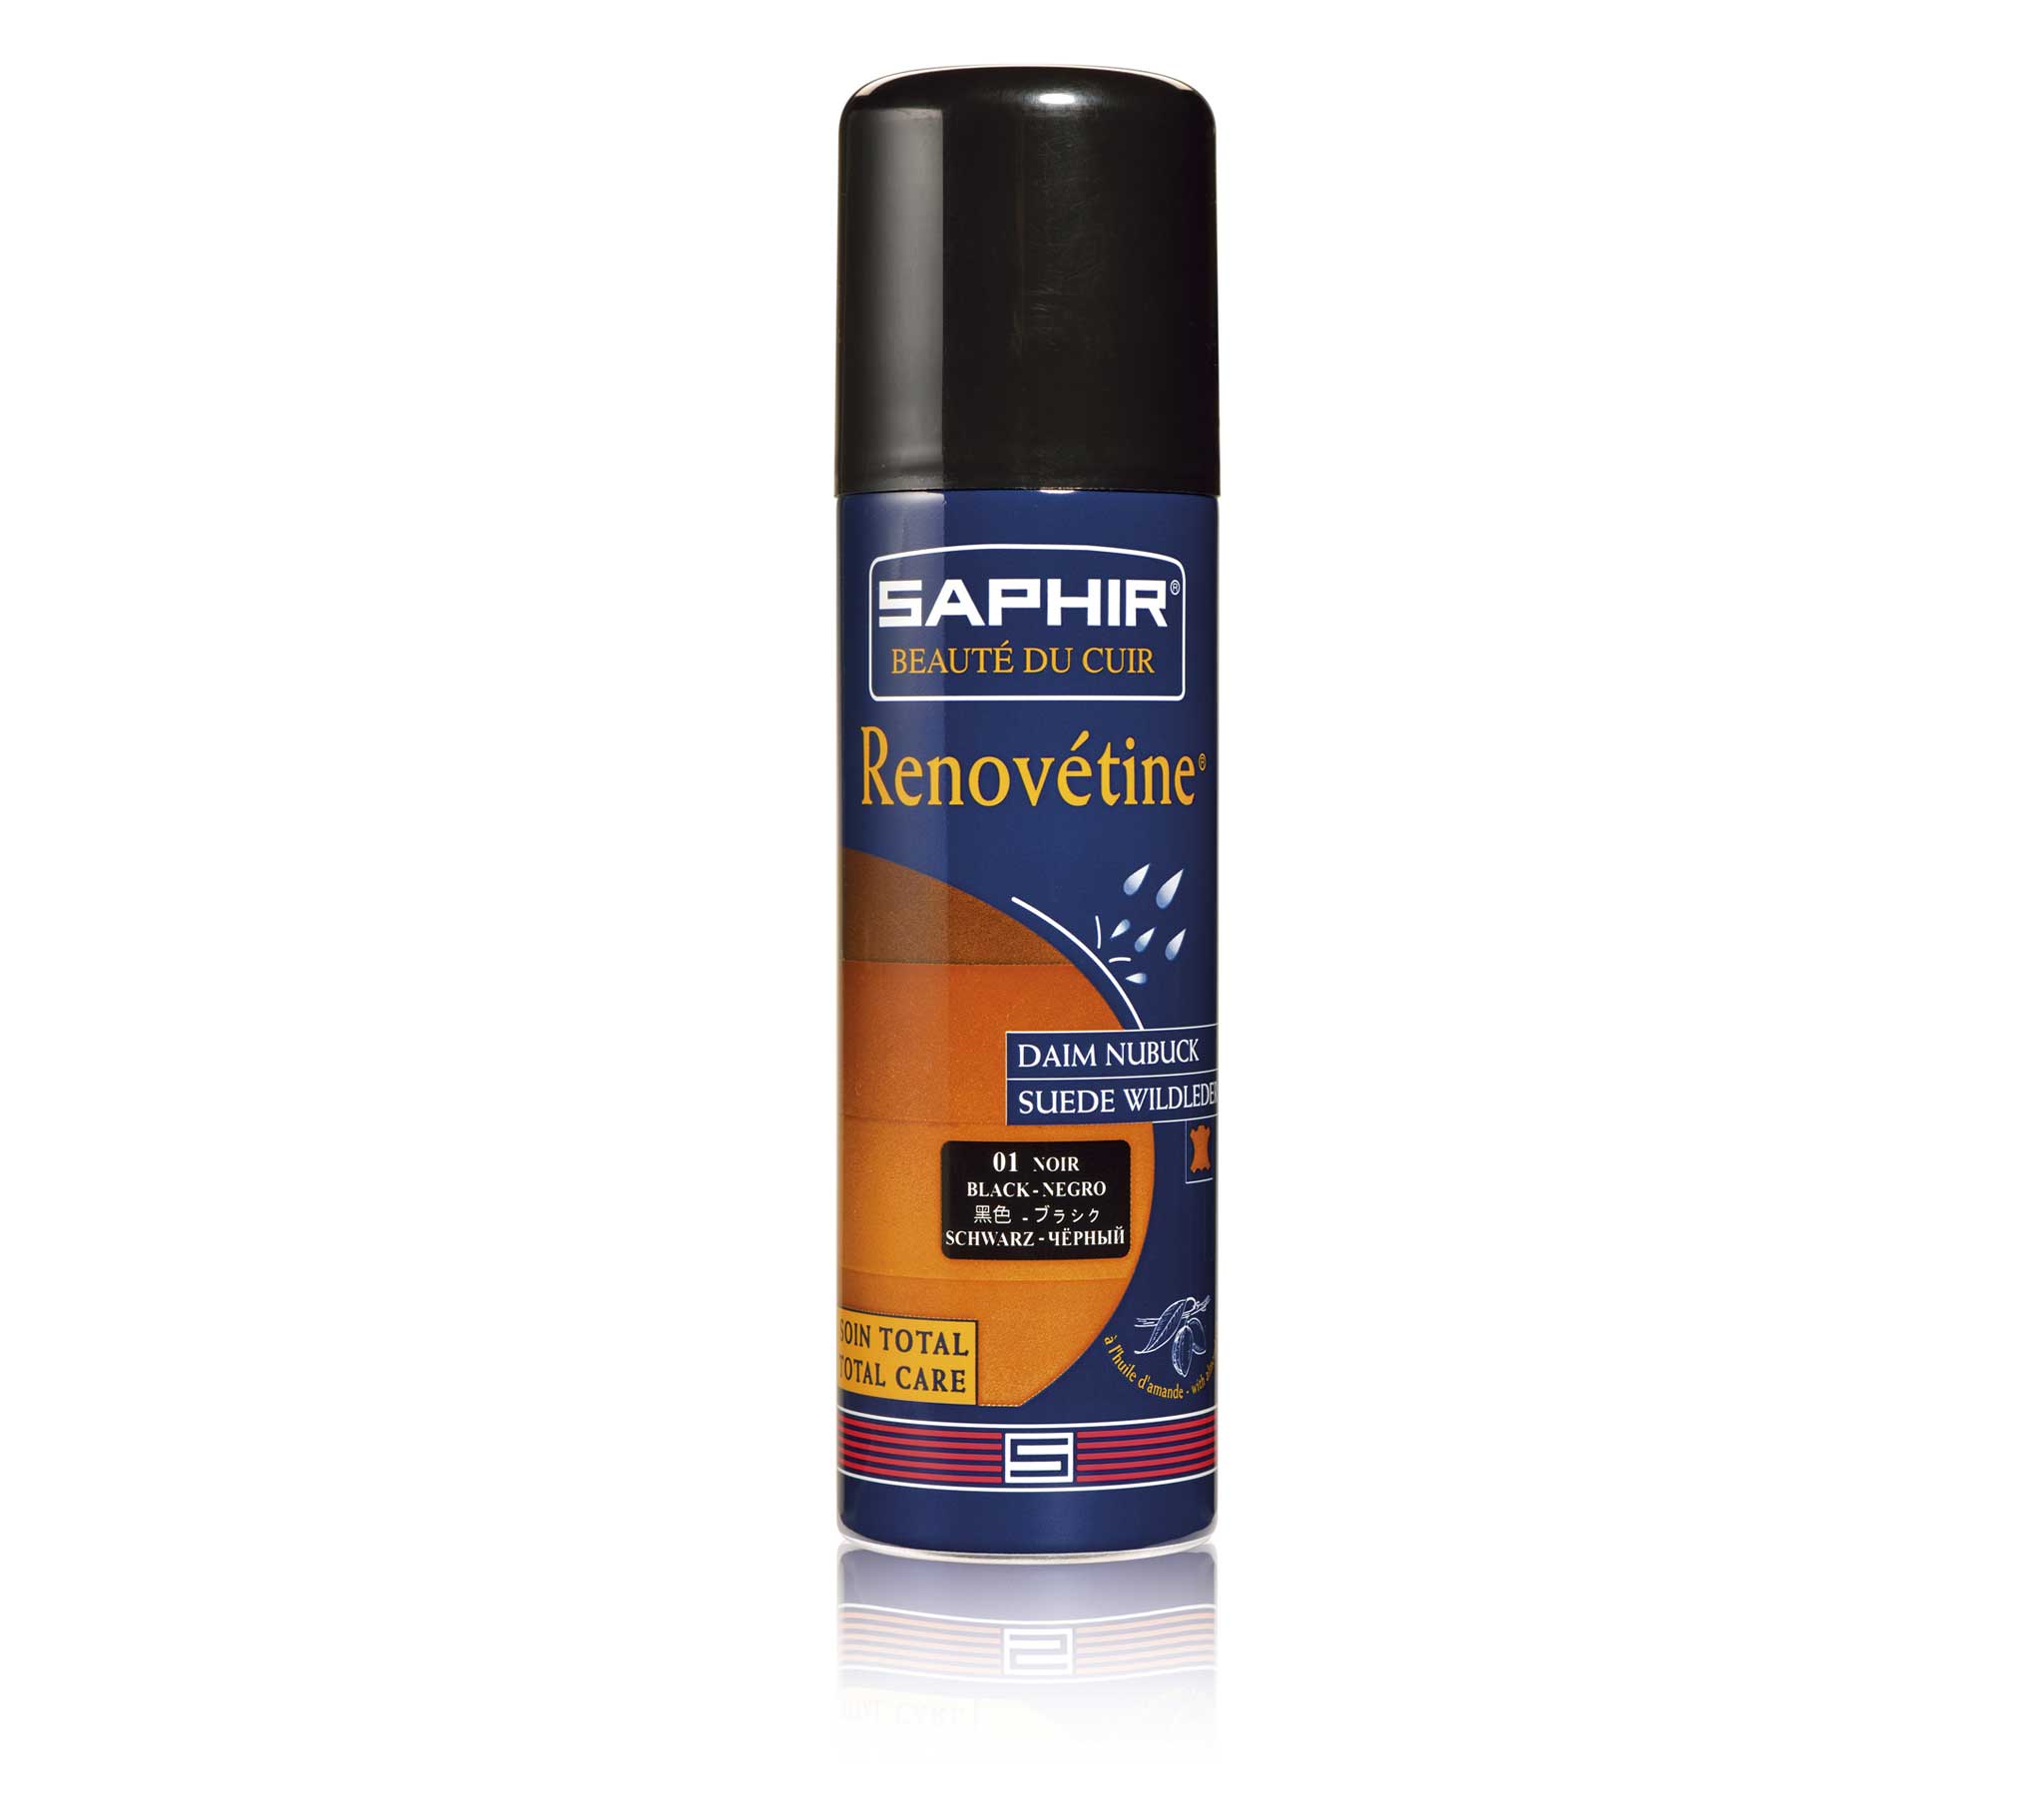 Saphir Nano Invulner Waterproofing Spray (250 ml) - Saphir - Suede Shoe  Care - Shoe care, Shoes - Gentleman Store